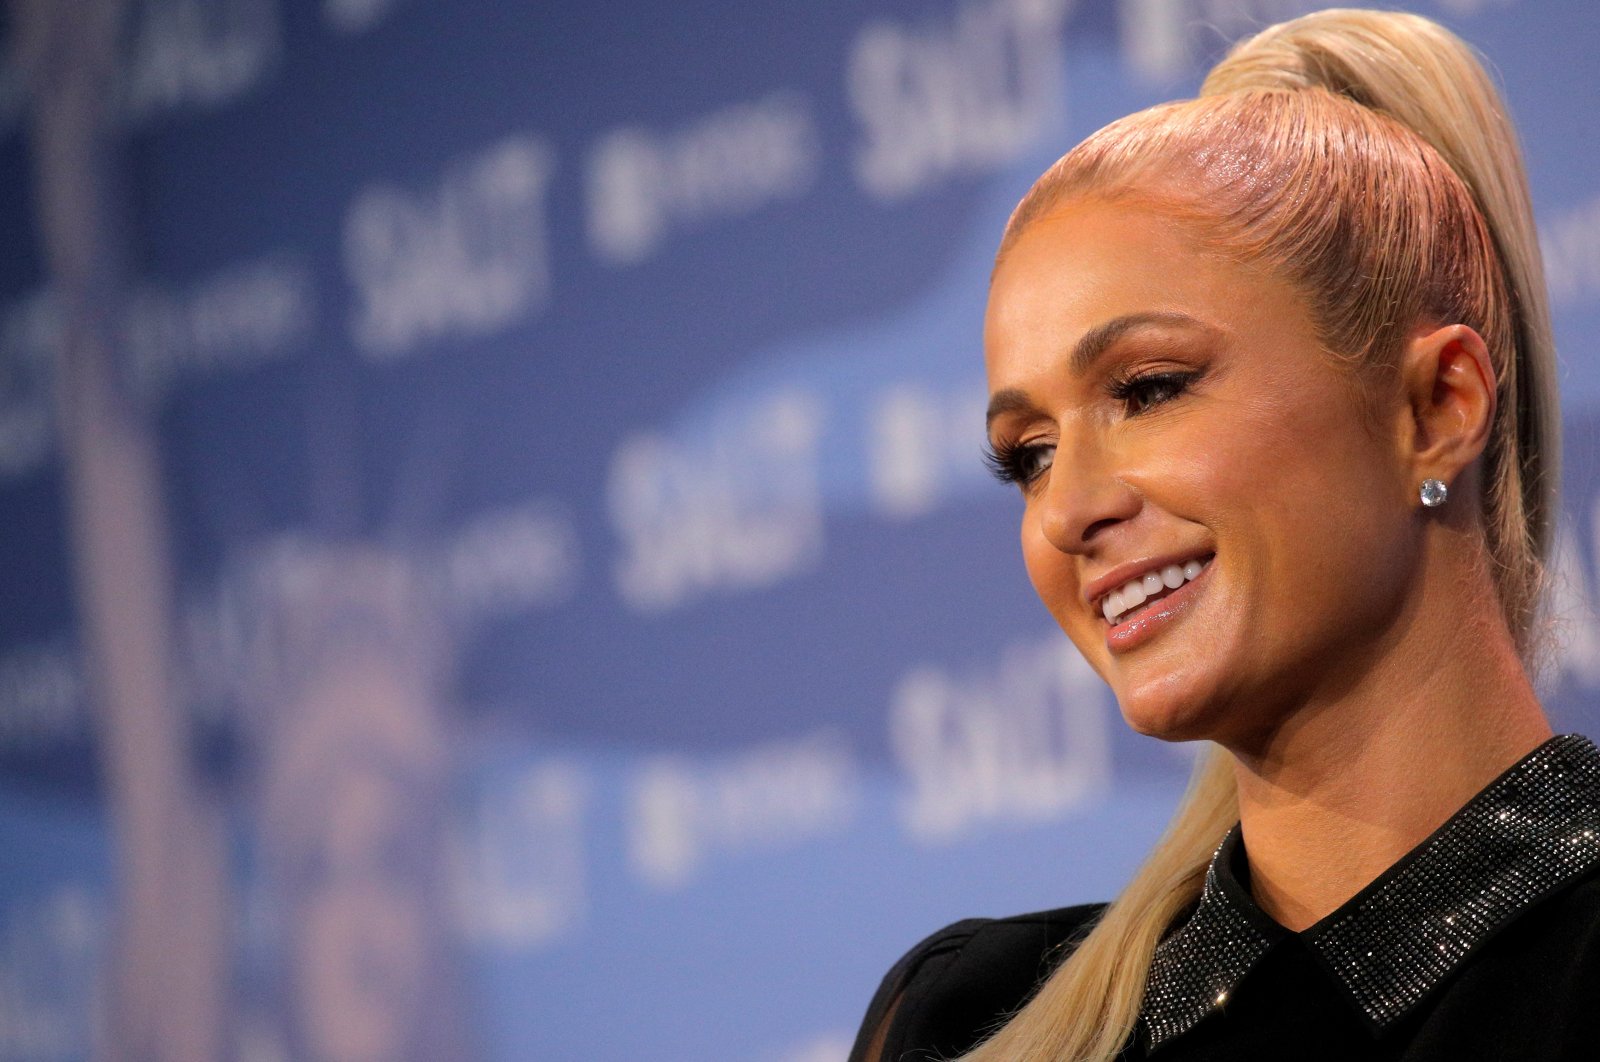 Bintang reality TV AS Paris Hilton meluncurkan bisnis metaverse